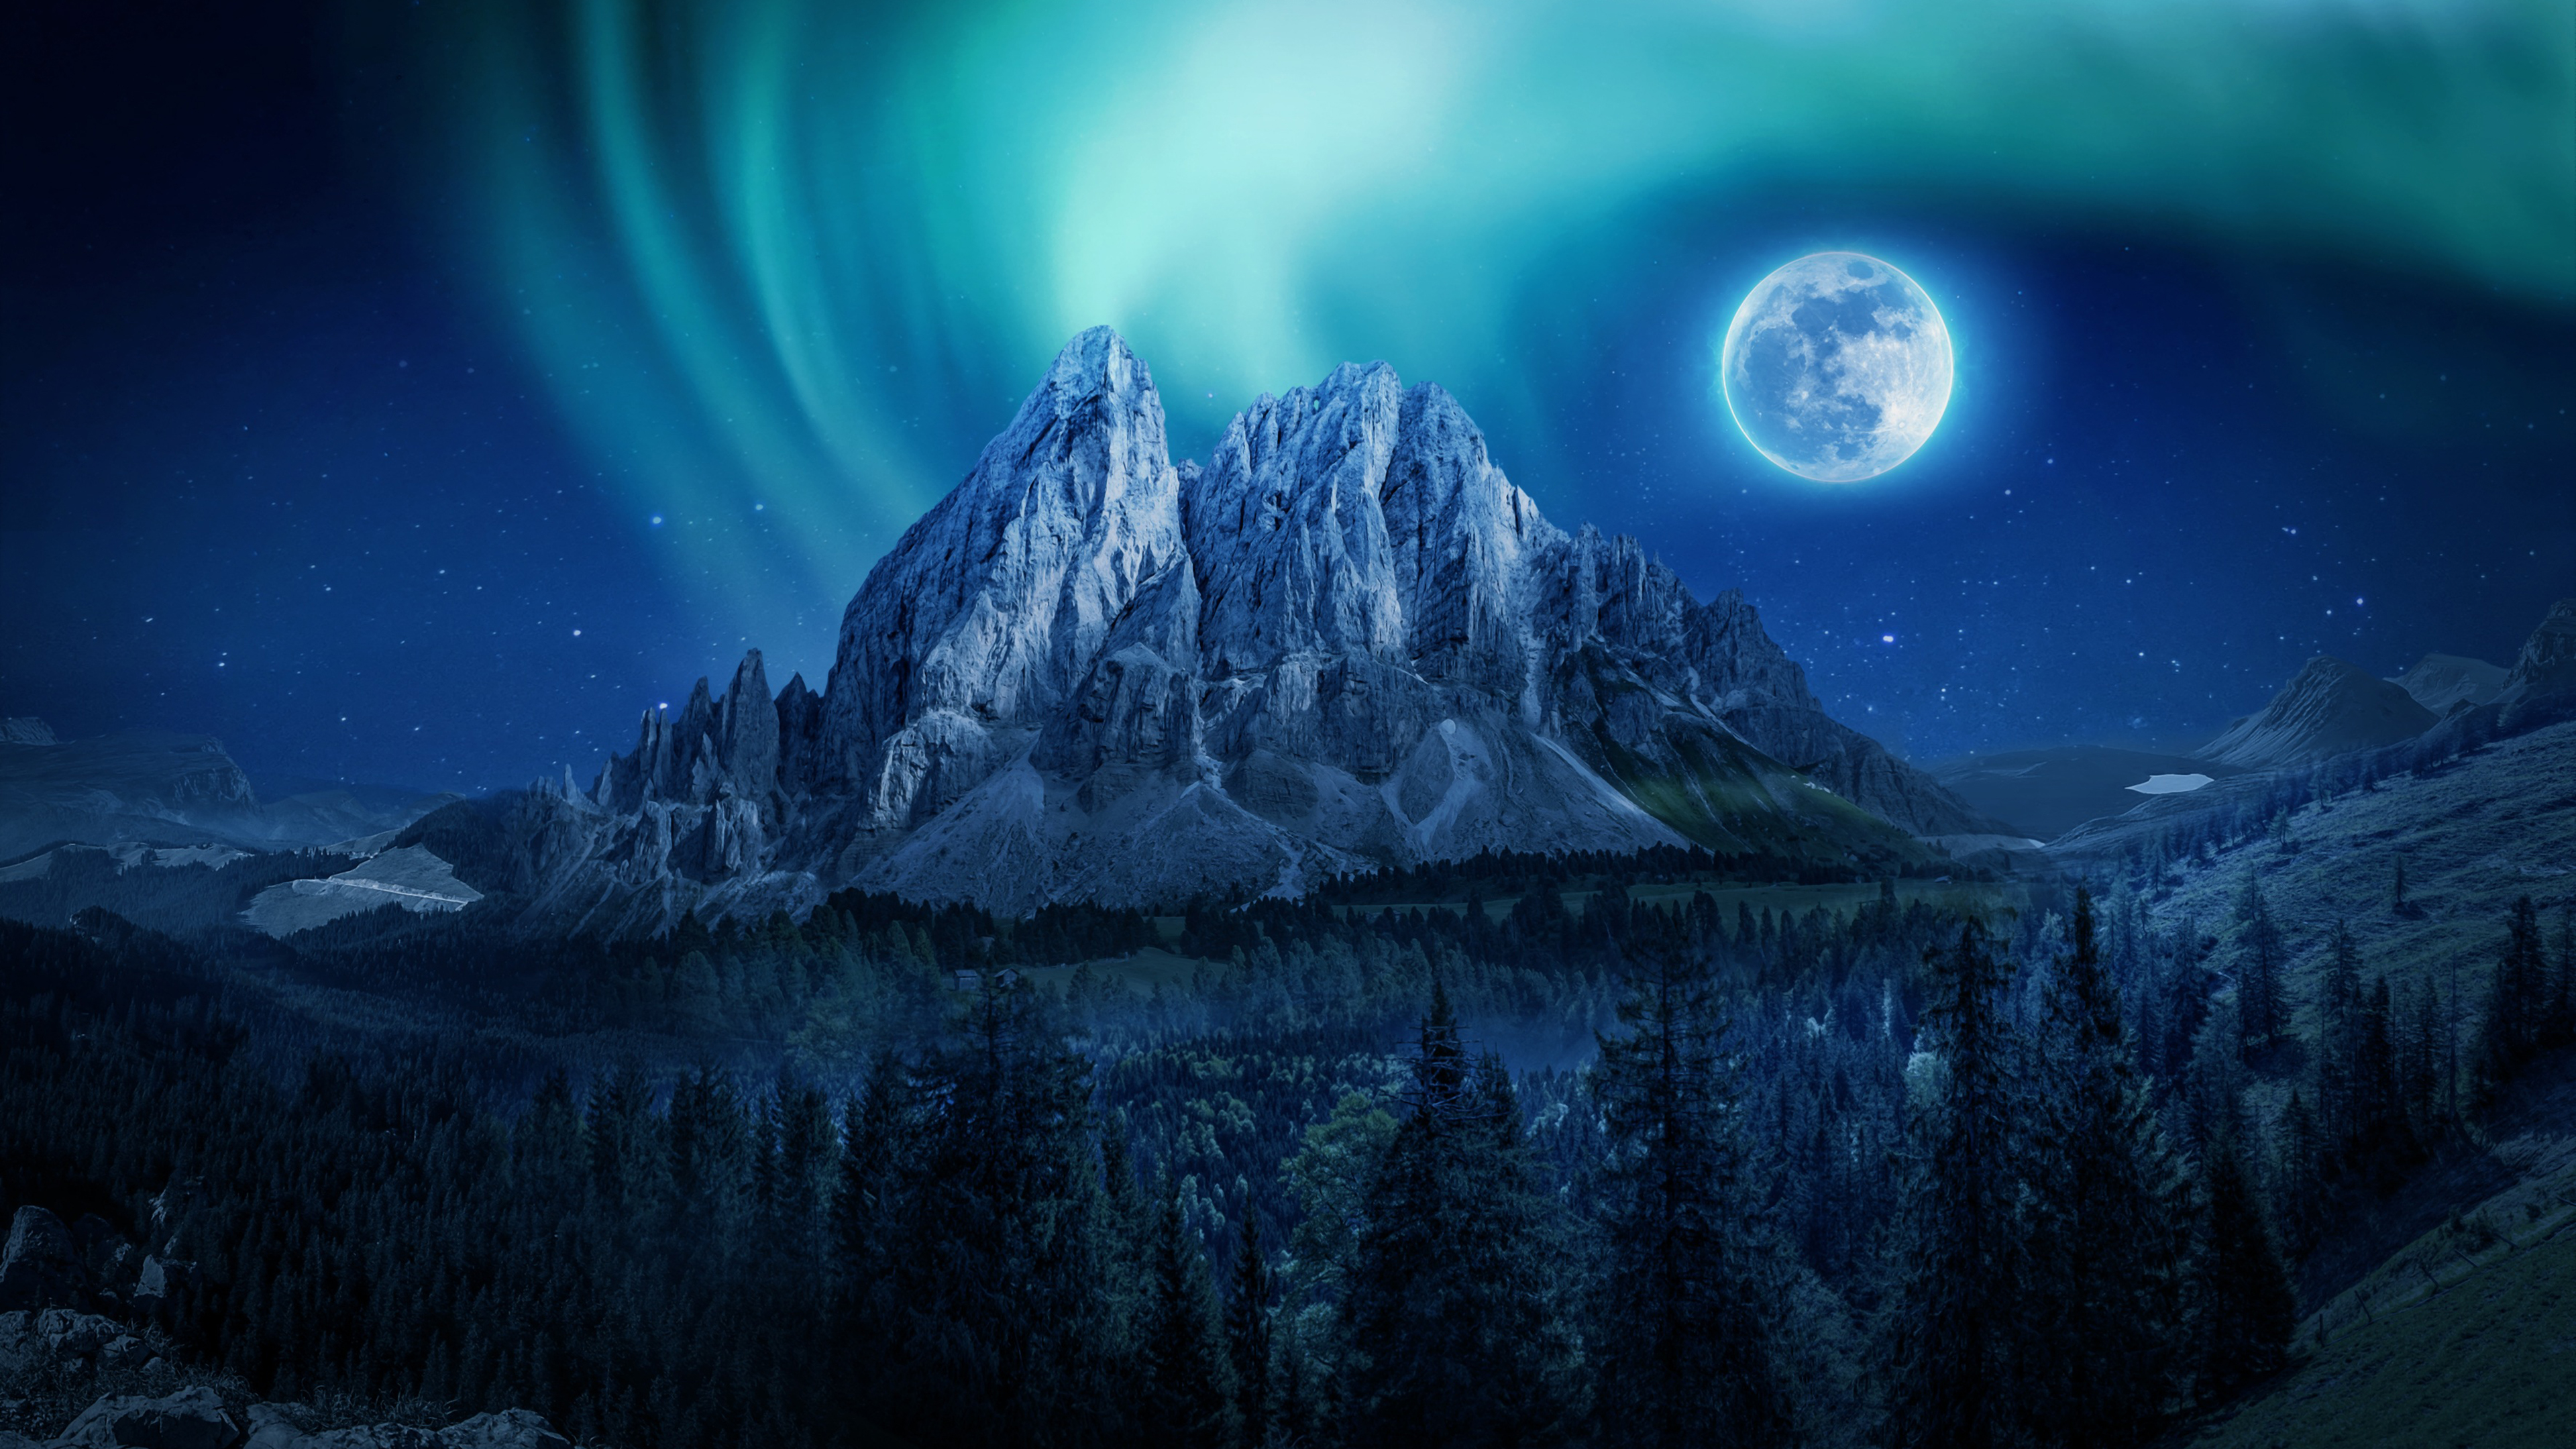 Mountain Moon Nightscape 4k - Mountain Aurora Borealis - HD Wallpaper 